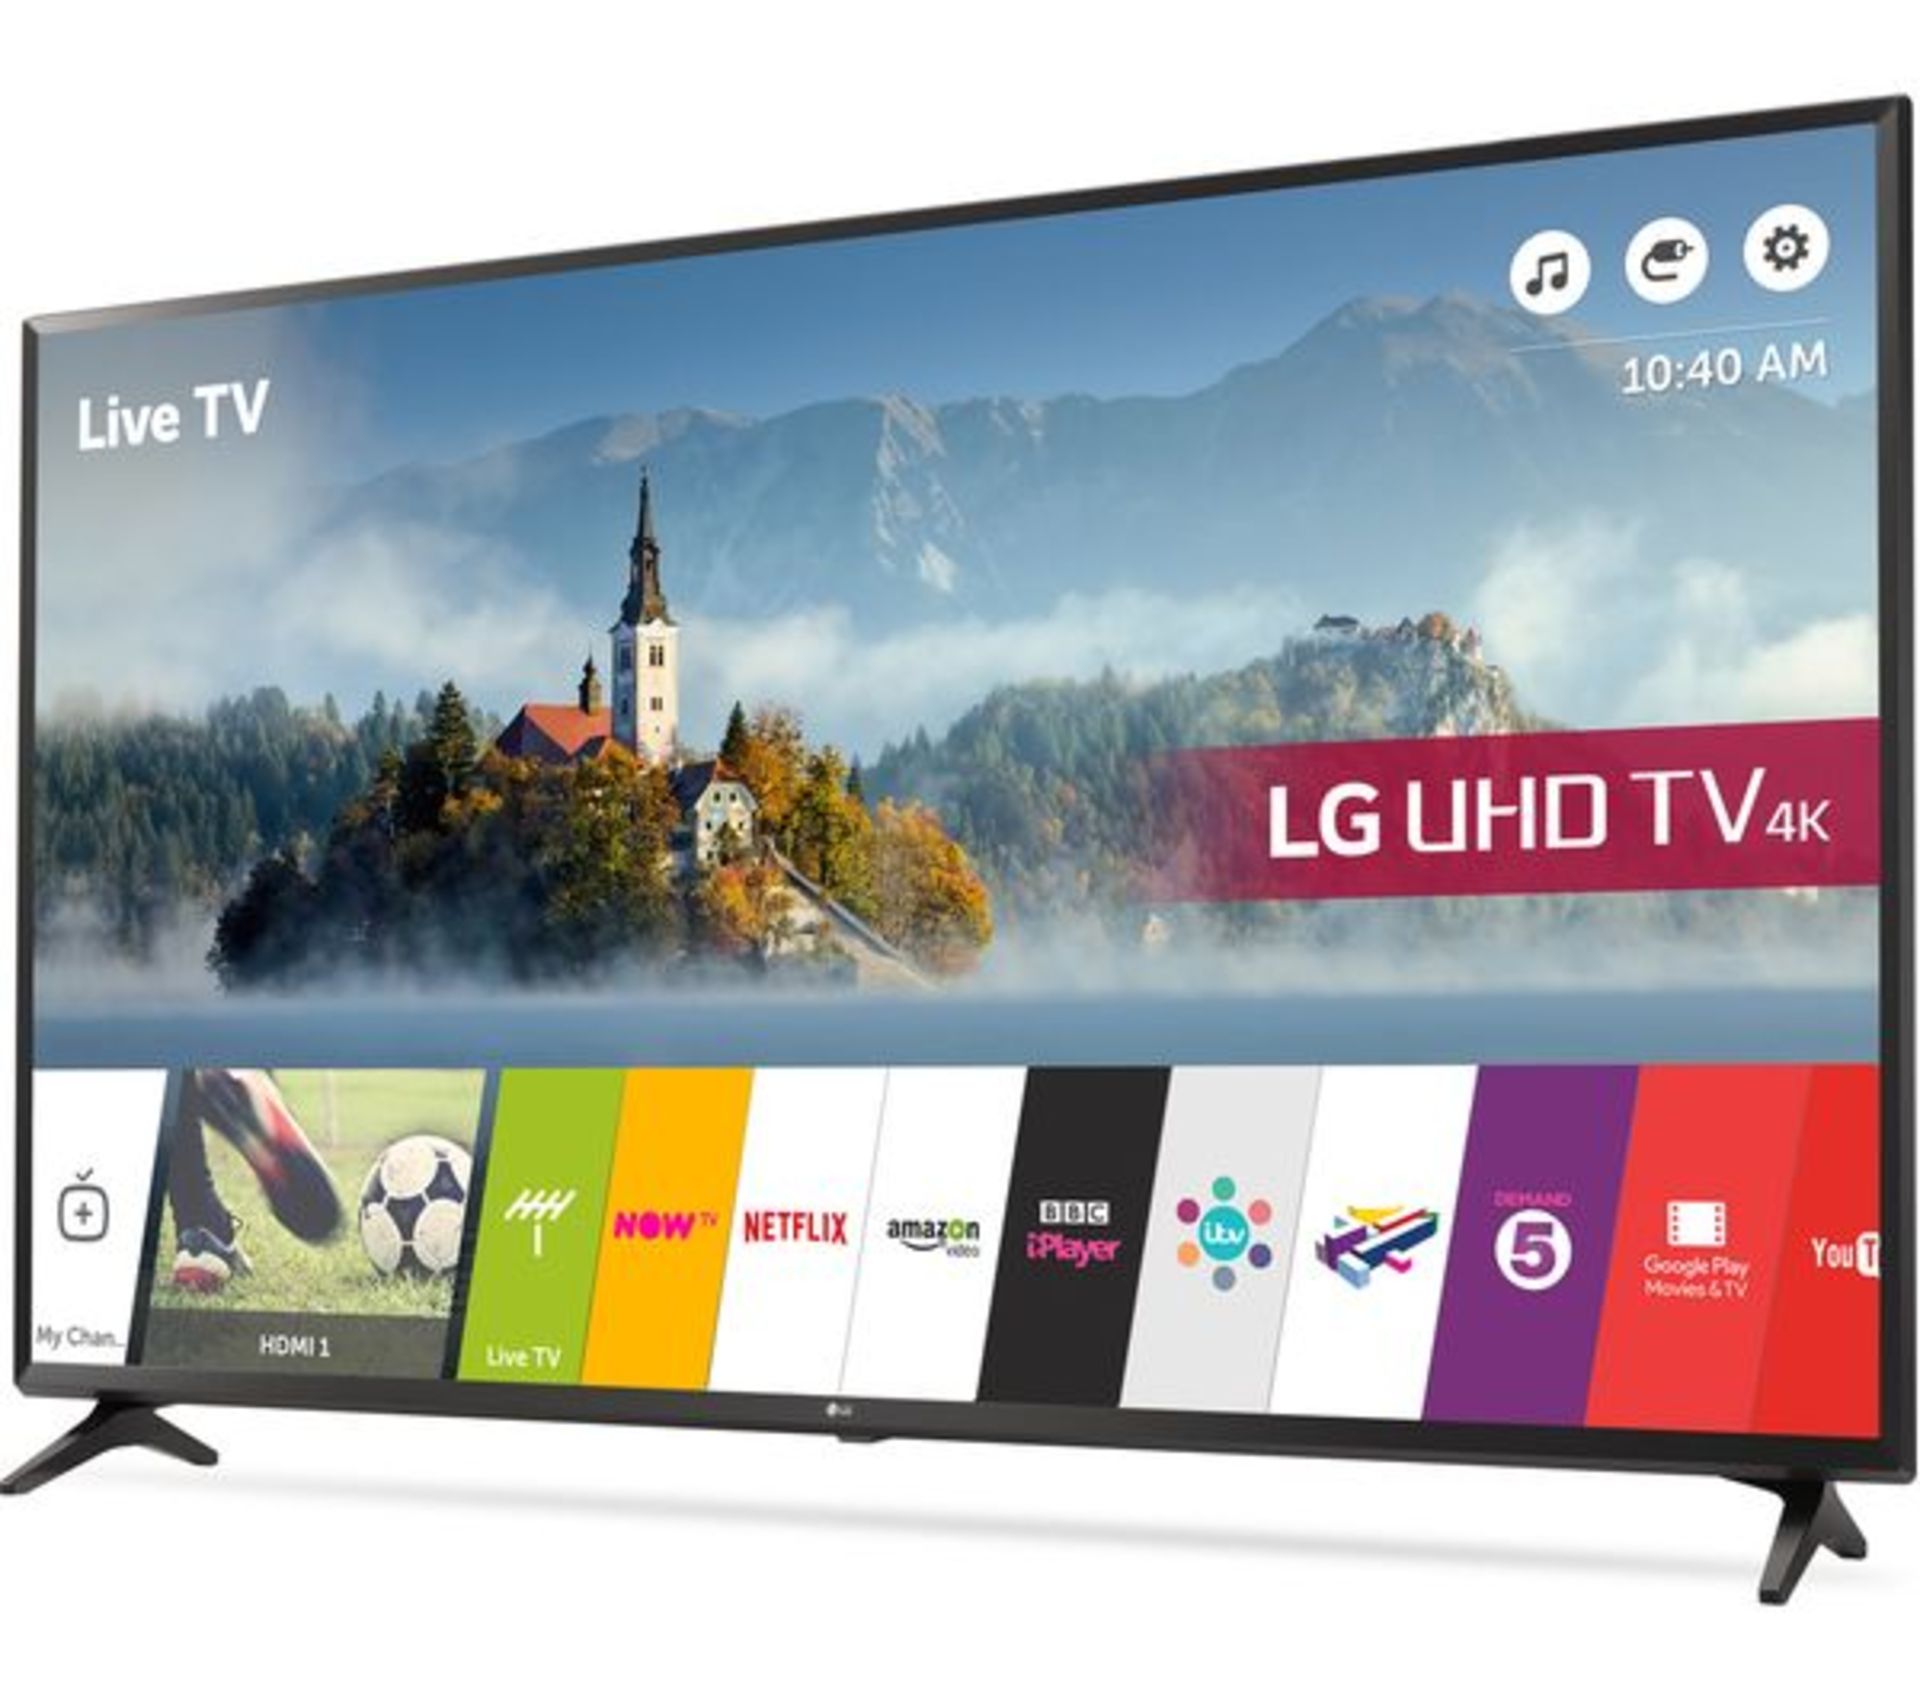 V Grade A LG 43" Full Ultra HD 4K Smart LED TV - Catch Up & 4K Streaming - Freeview Play - Built